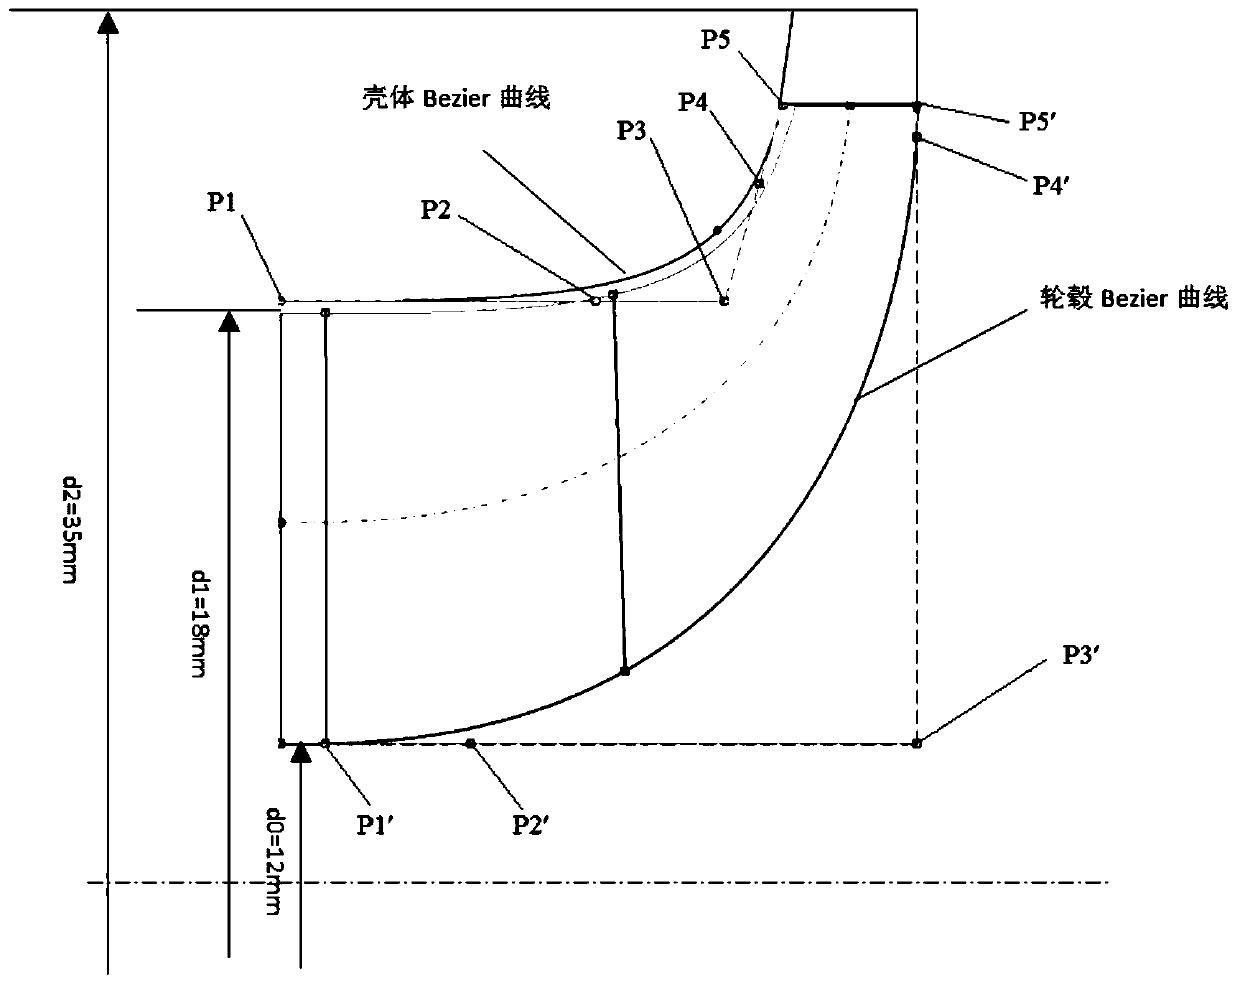 Design method of centrifugal compressor and diffuser structure